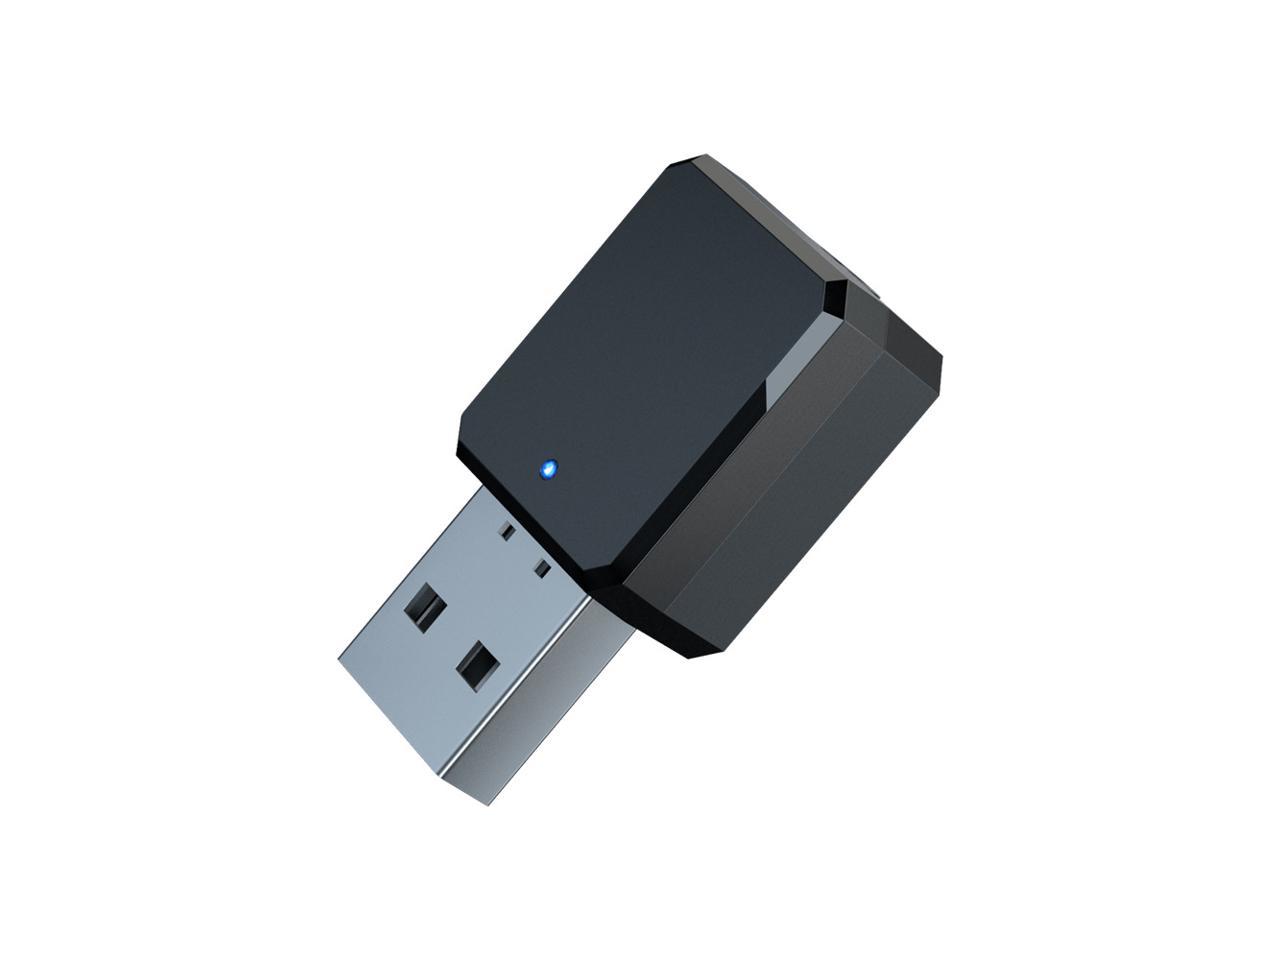 Bluetooth Stick für PC Kopfhörer Headset unterstützt Windows 10/8/7 Lautsprecher Maus Maxuni Bluetooth USB Adapter Dongle 5.1 Desktop Laptop Tastatur